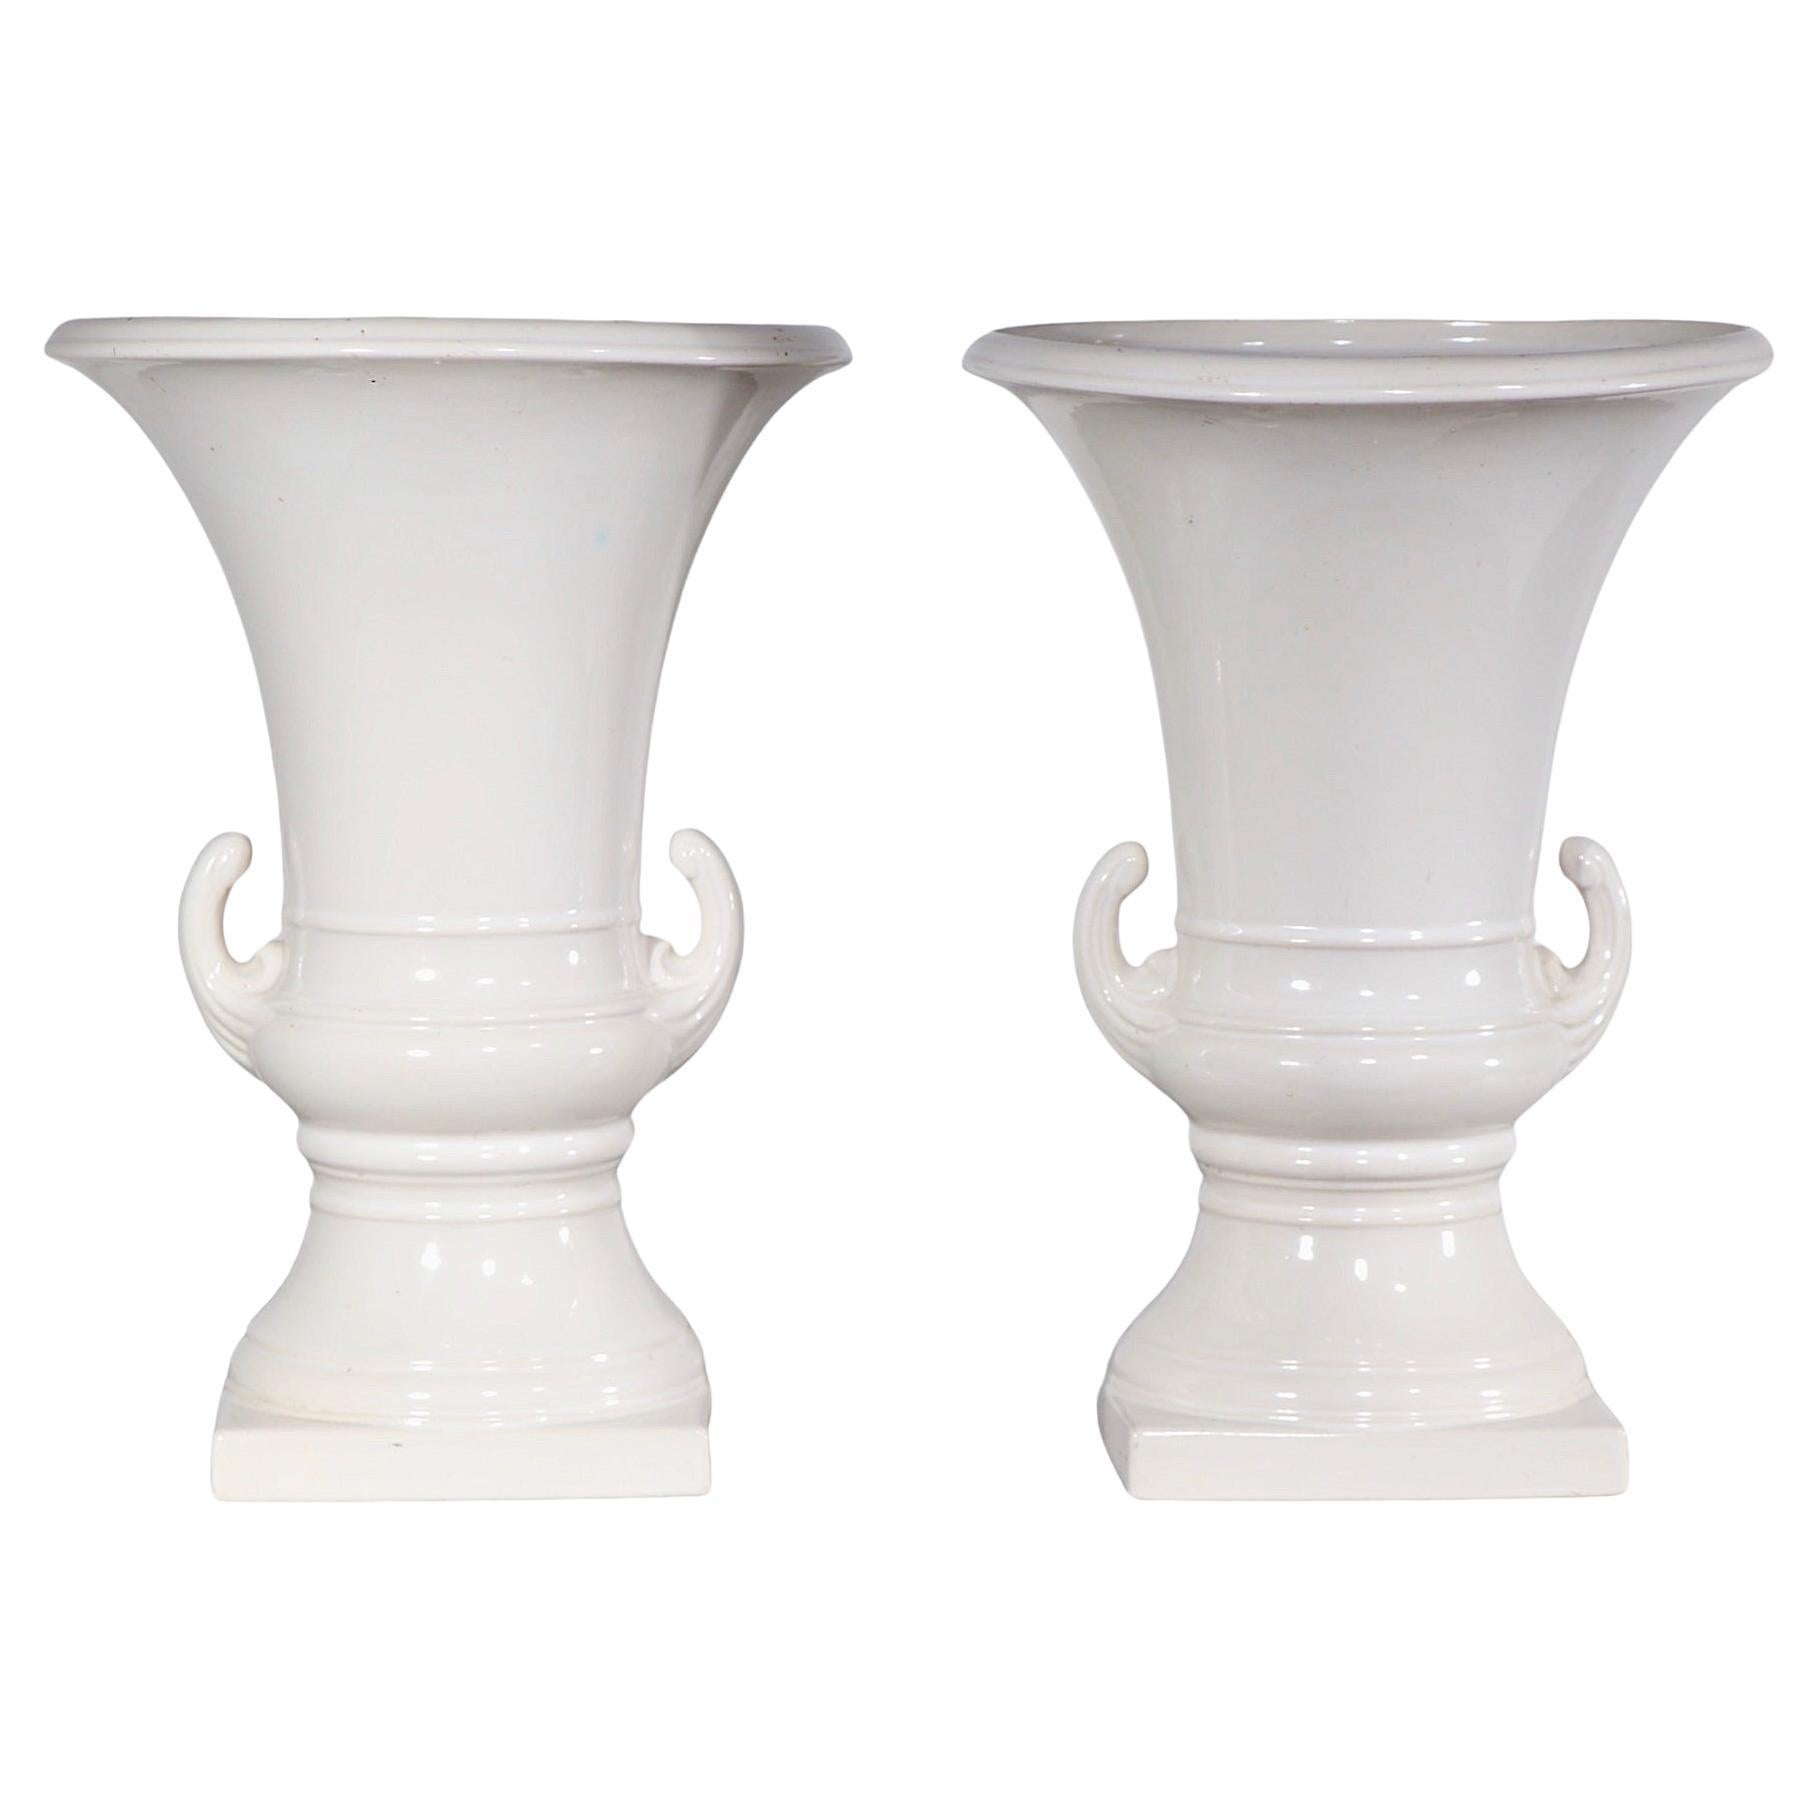 Pr. White on White Ceramic Urn Campagna  Form Vases   For Sale